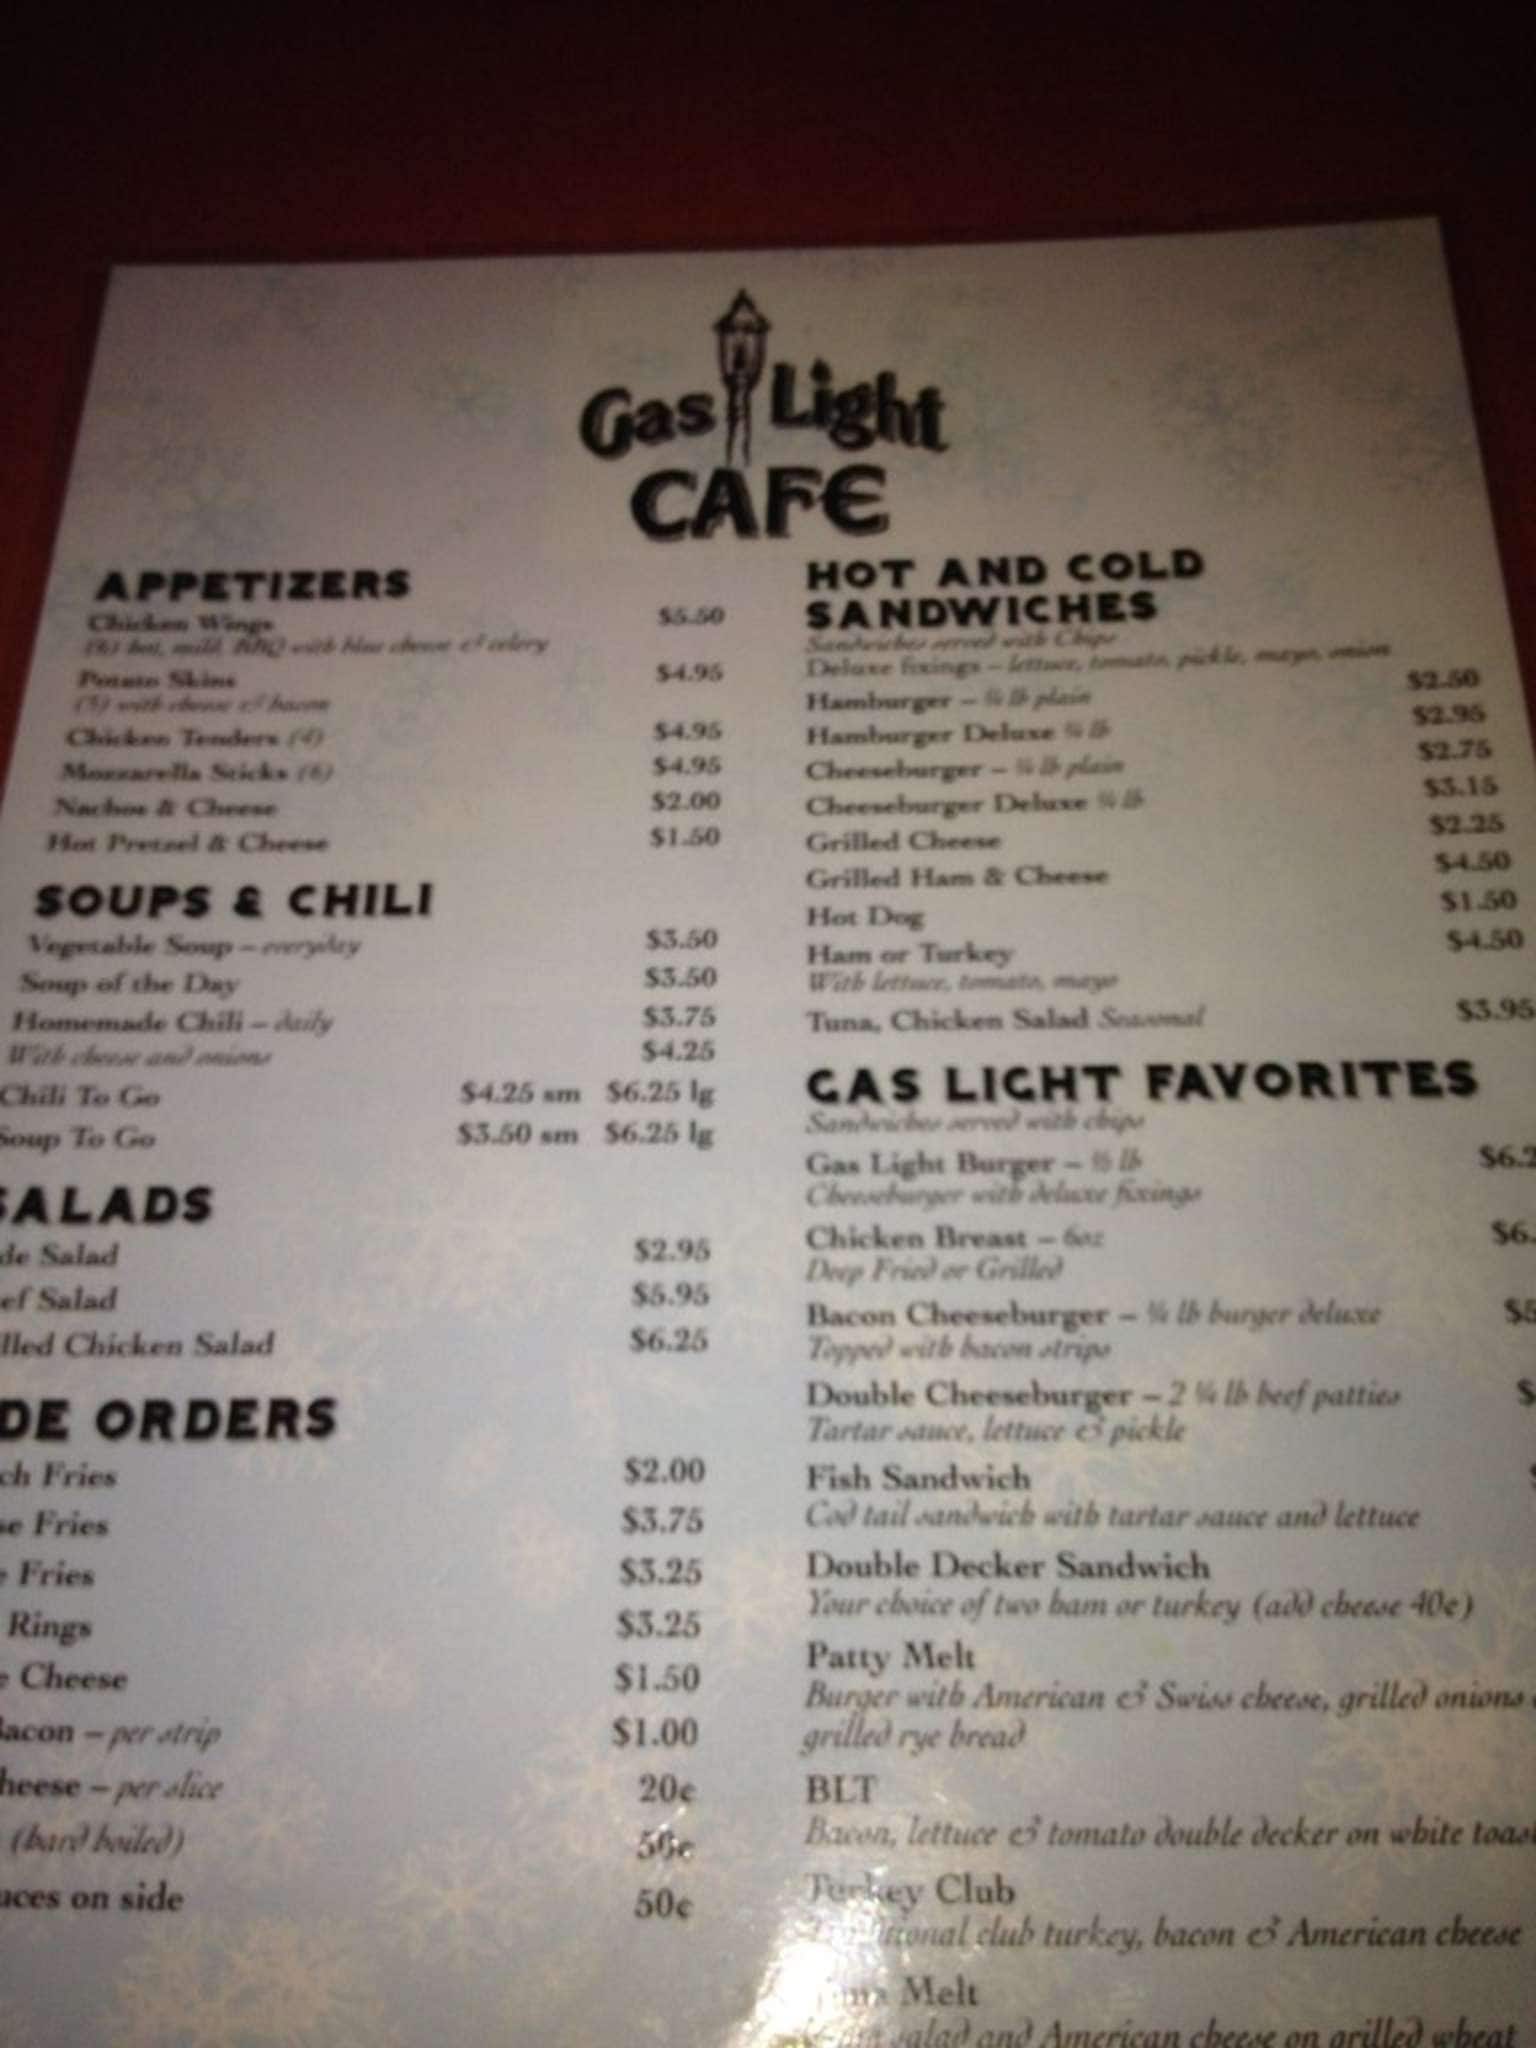 gaslight cafe sign